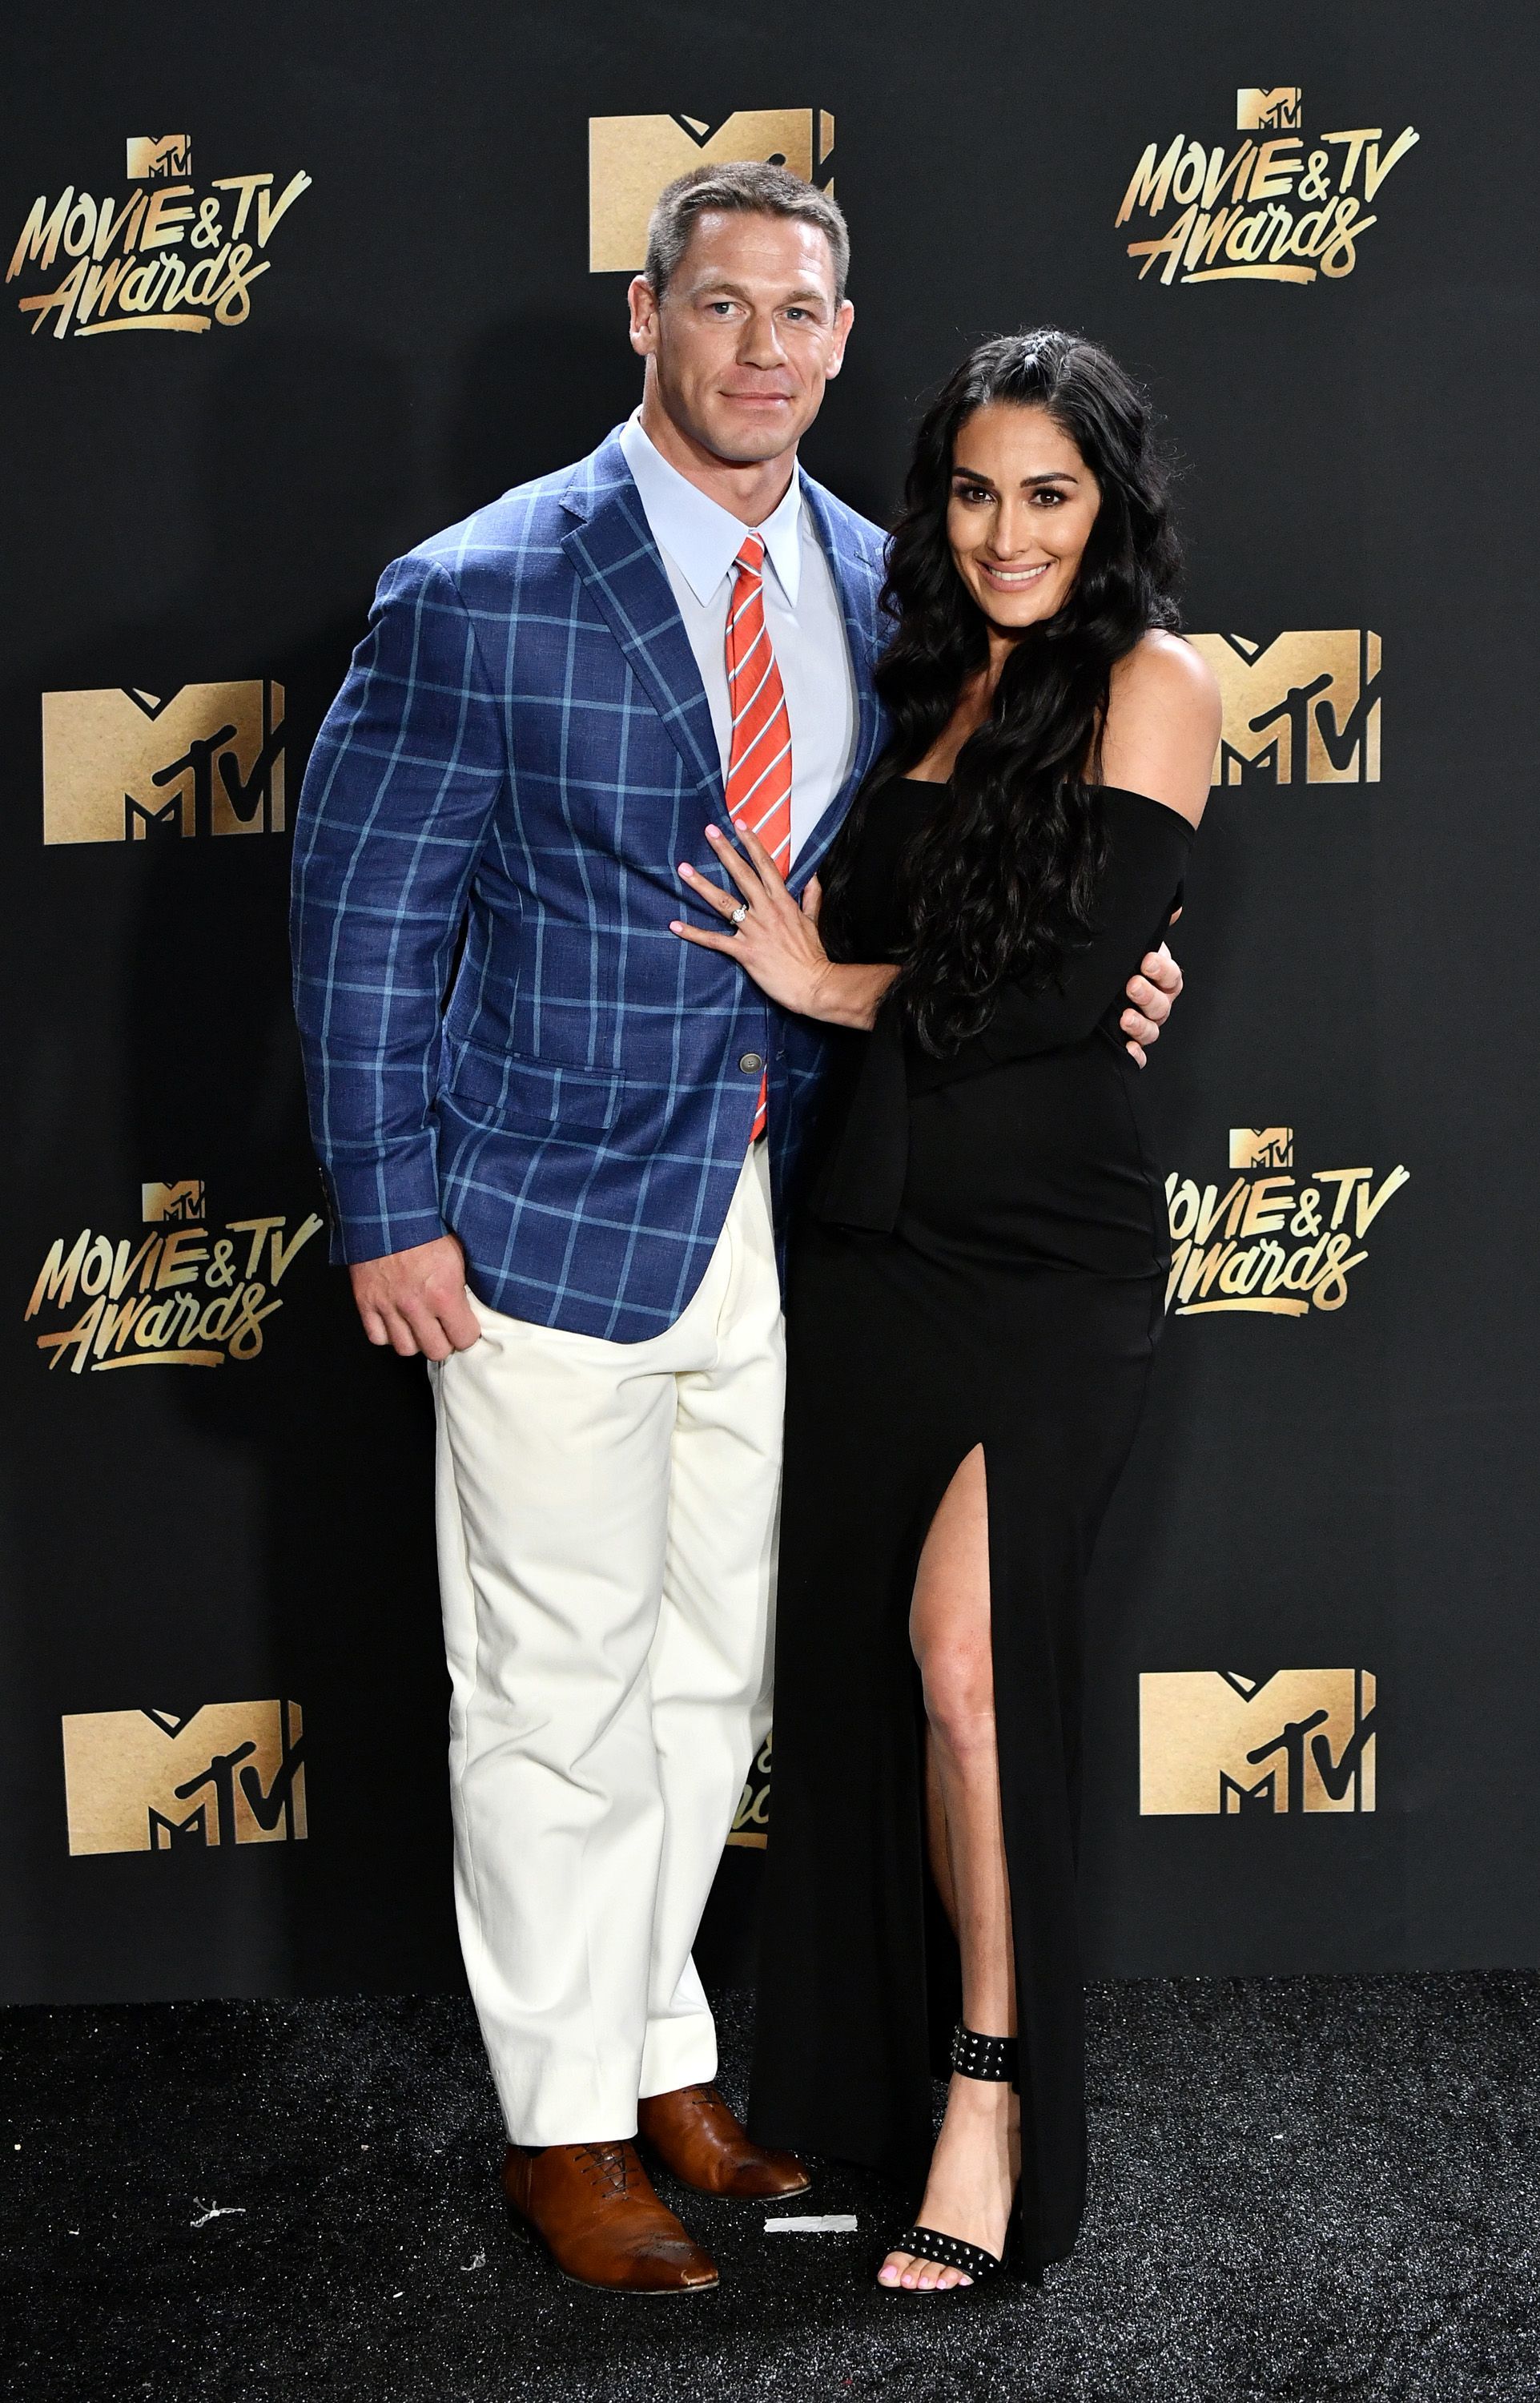 Nikki Bella says boyfriend John Cena is 'open to marriage' 